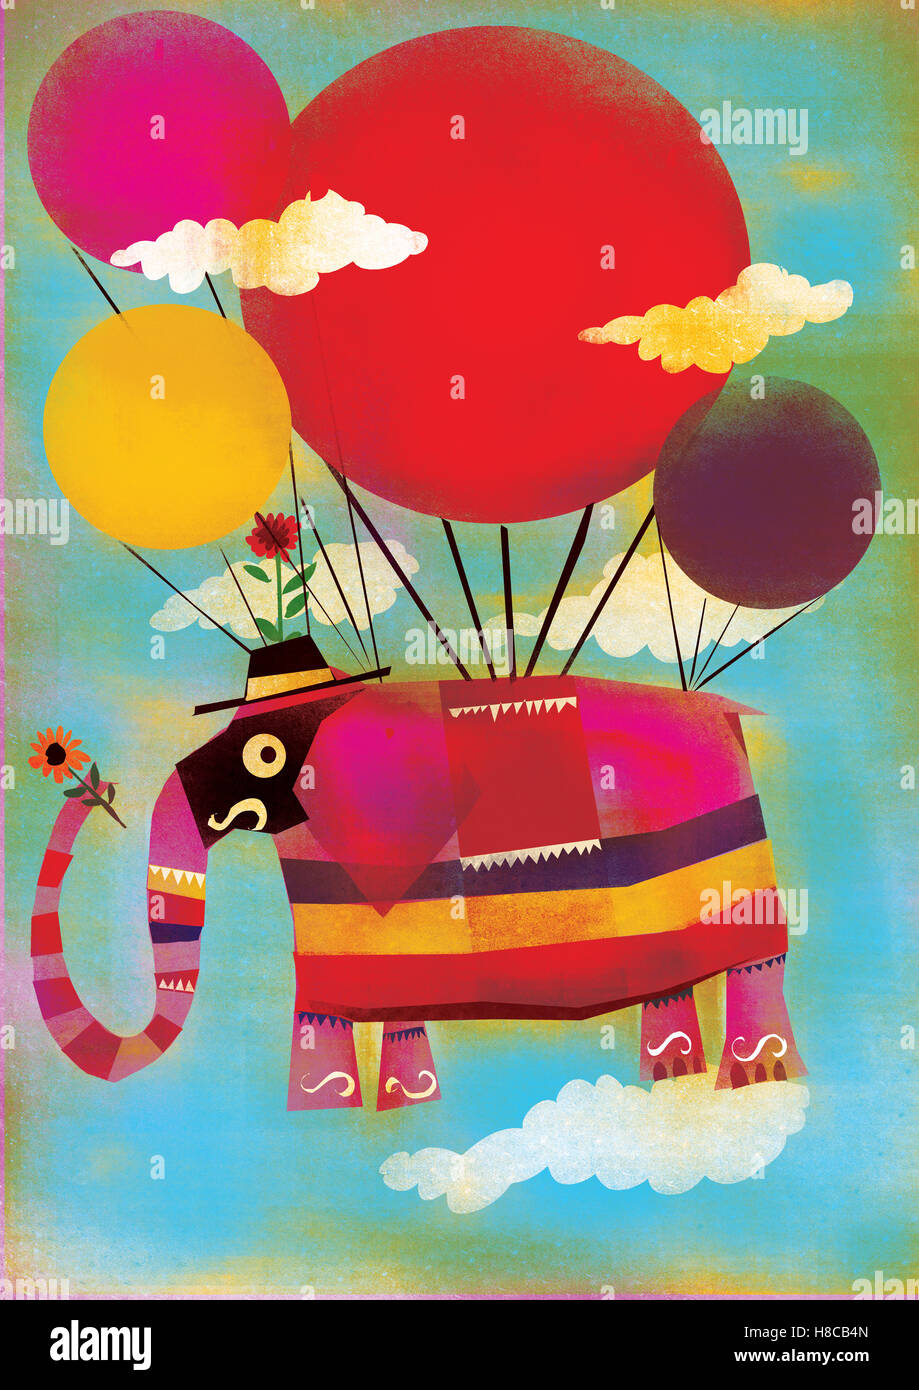 Elephant flying on balloons Stock Photo